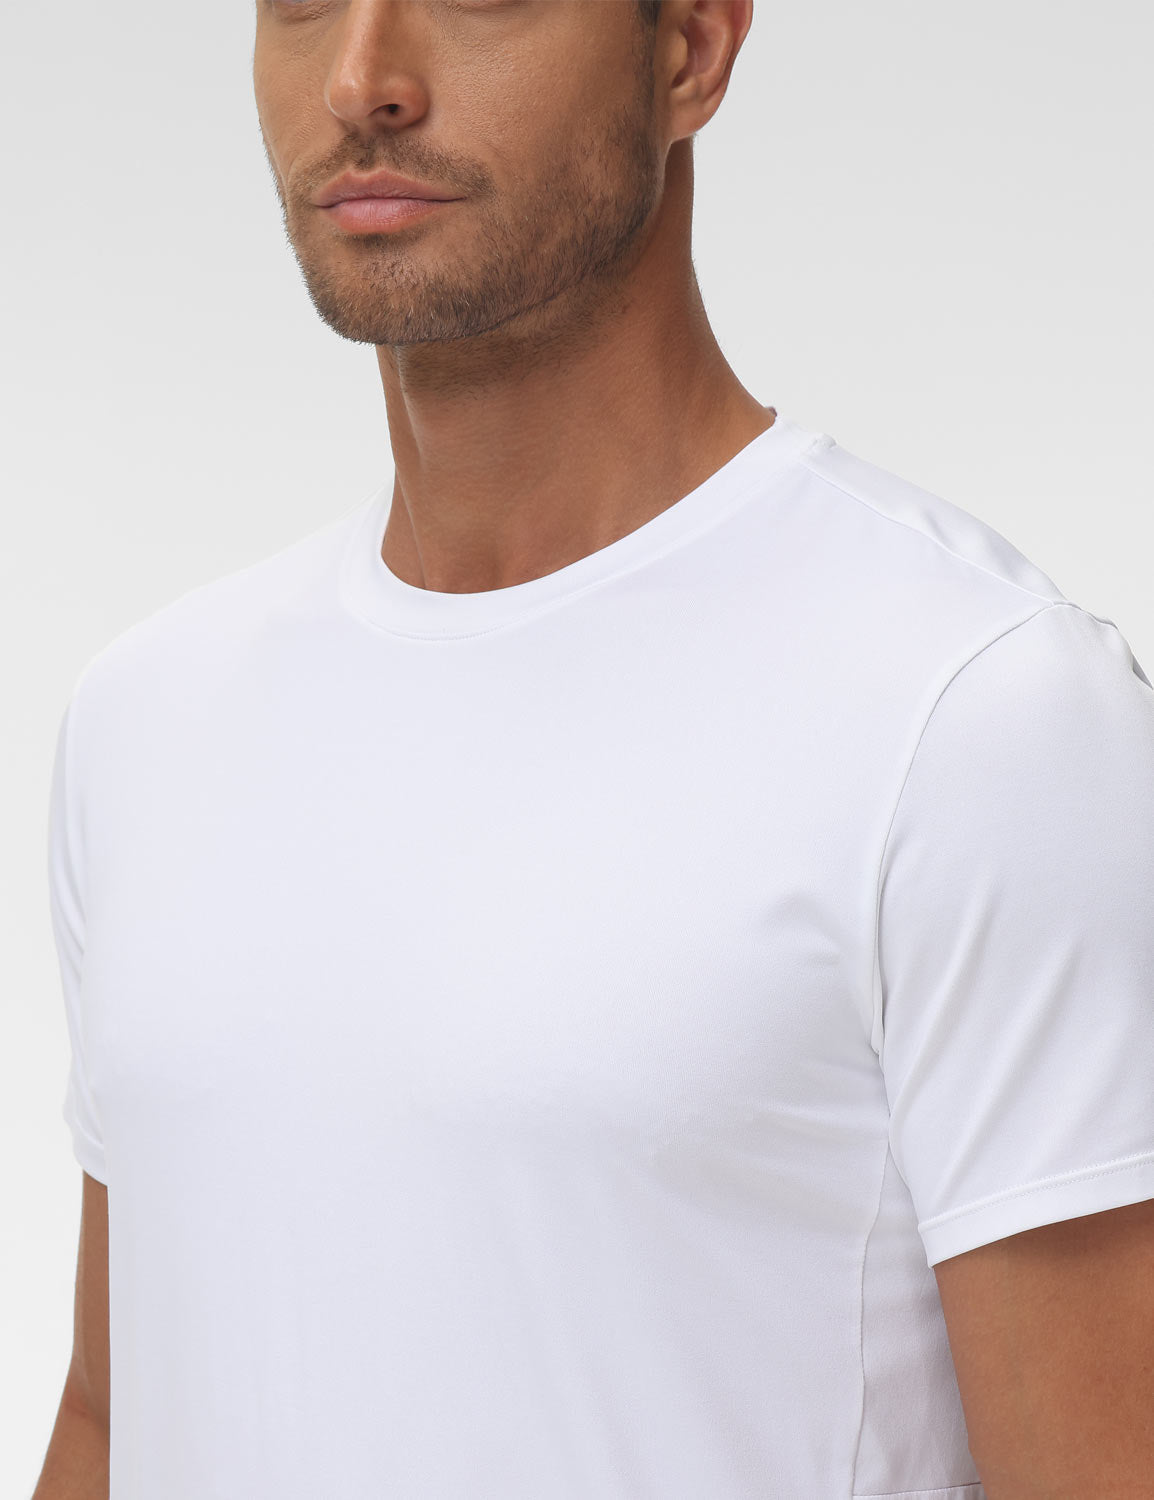 Baleaf Men's Fitted Crew Neck Short Sleeve T-shirts Lucent White Details